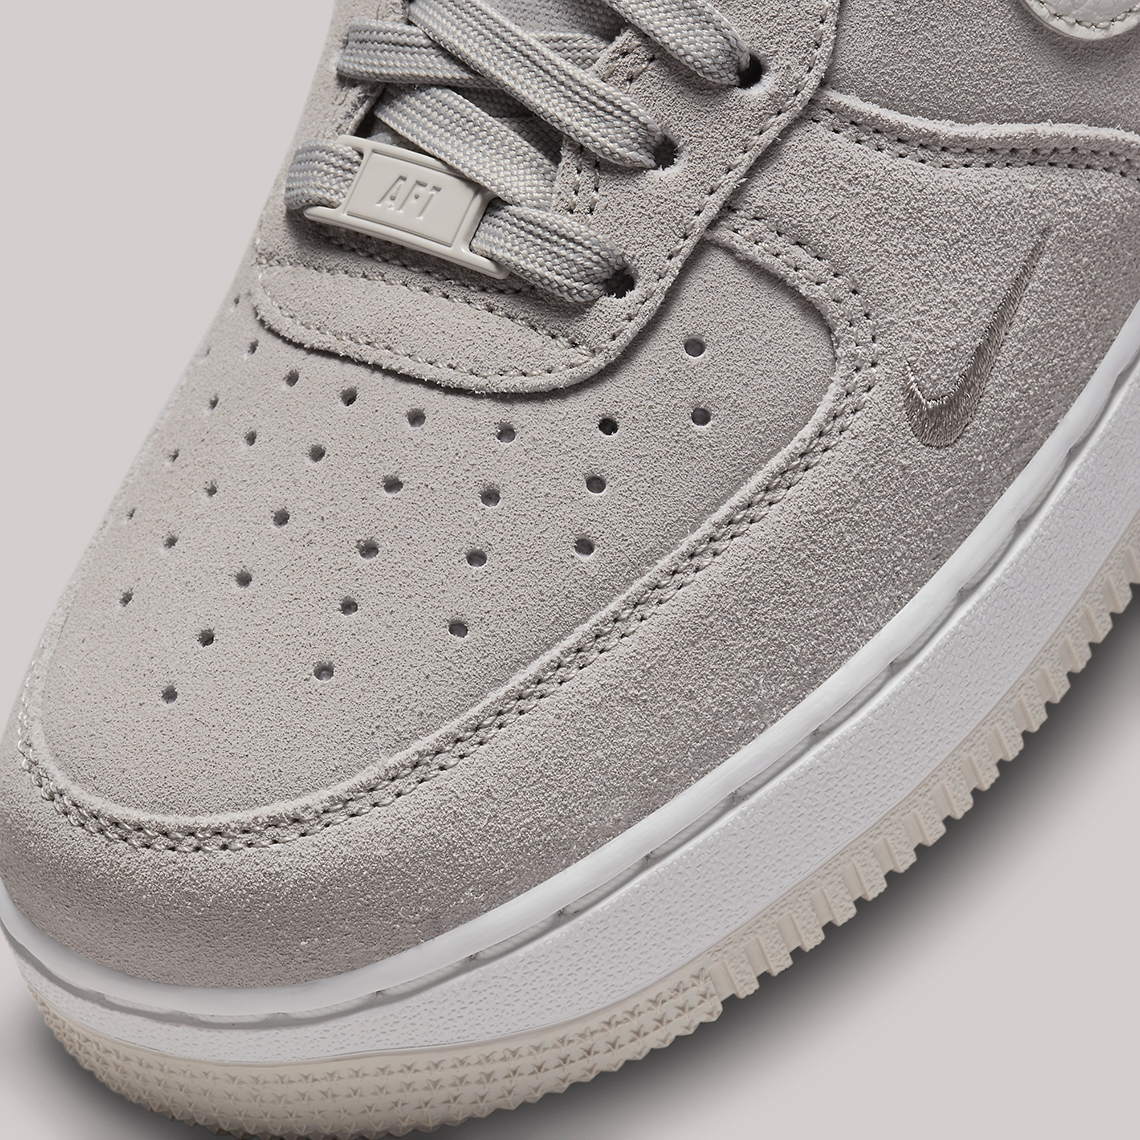 Nike Air Force 1 Premium Grey Suede | SneakerNews.com